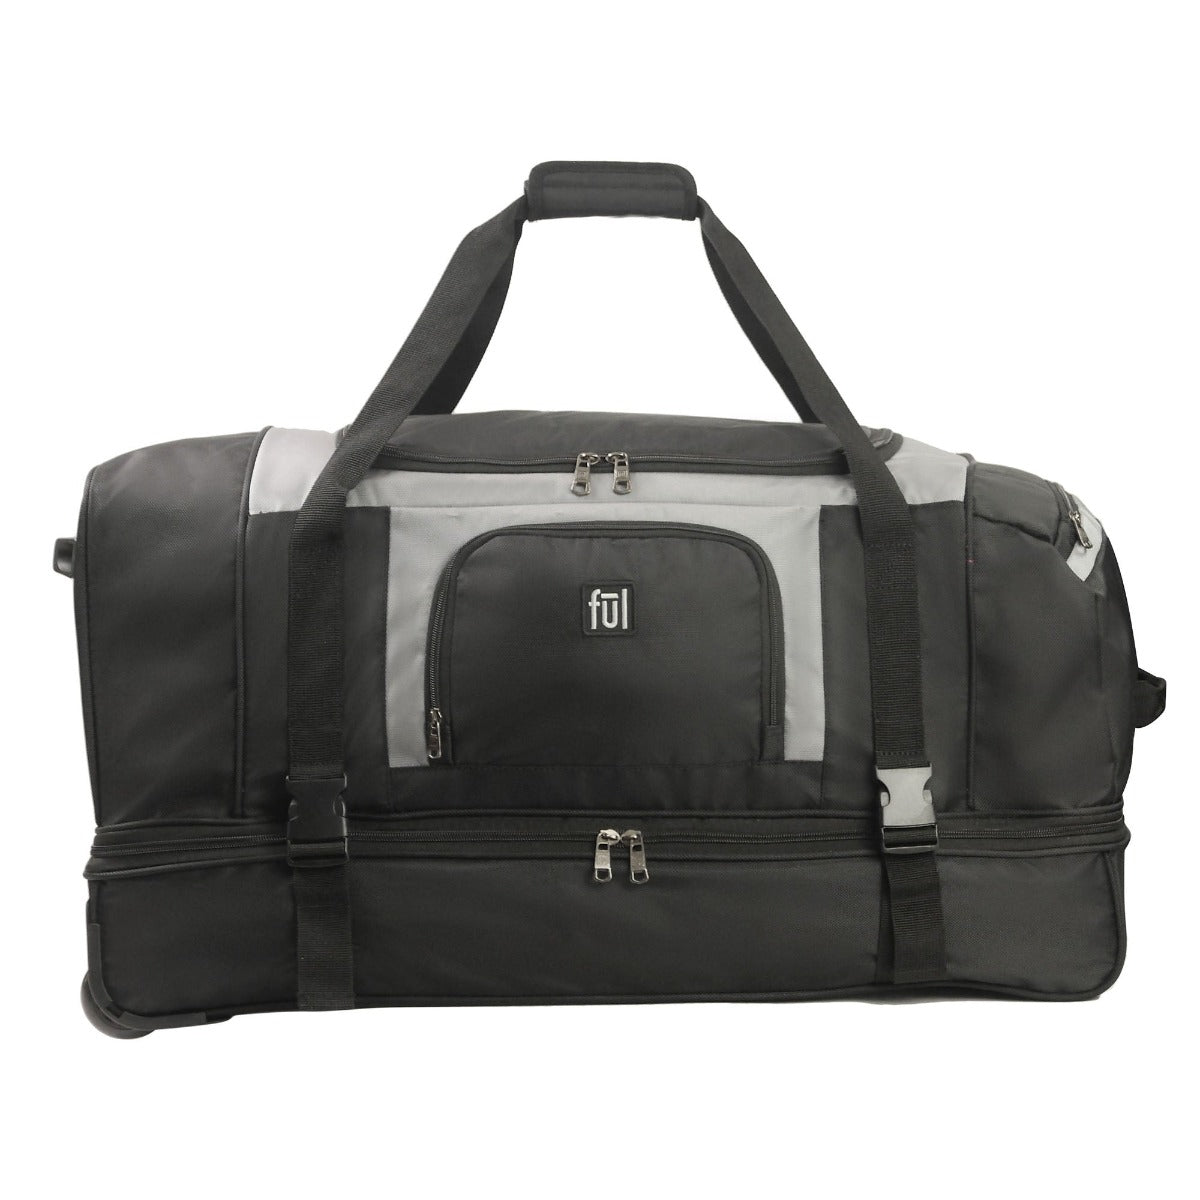 Rig Series 30-inch split level oversized rolling duffle bag in black